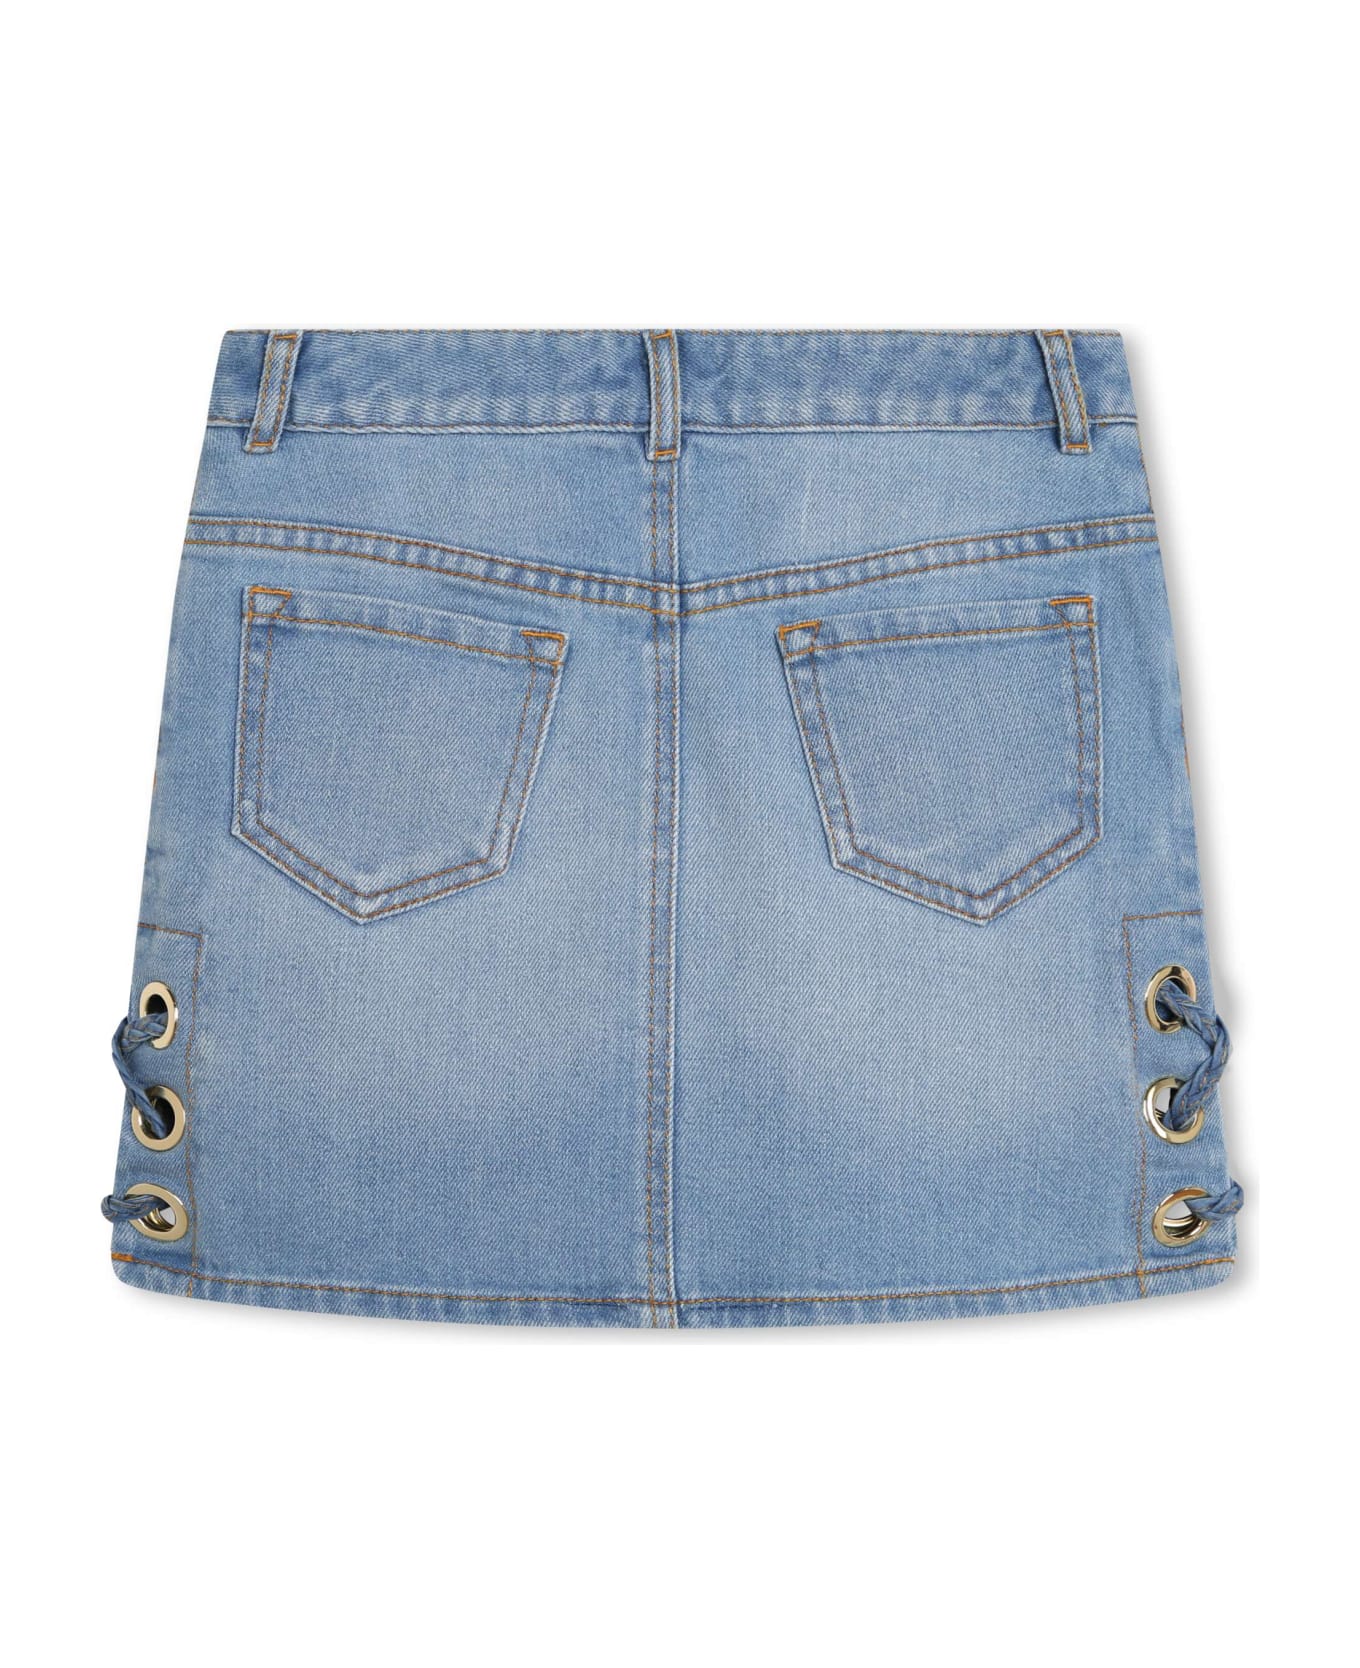 Chloé Denim Skirt With Embroidery - Blue